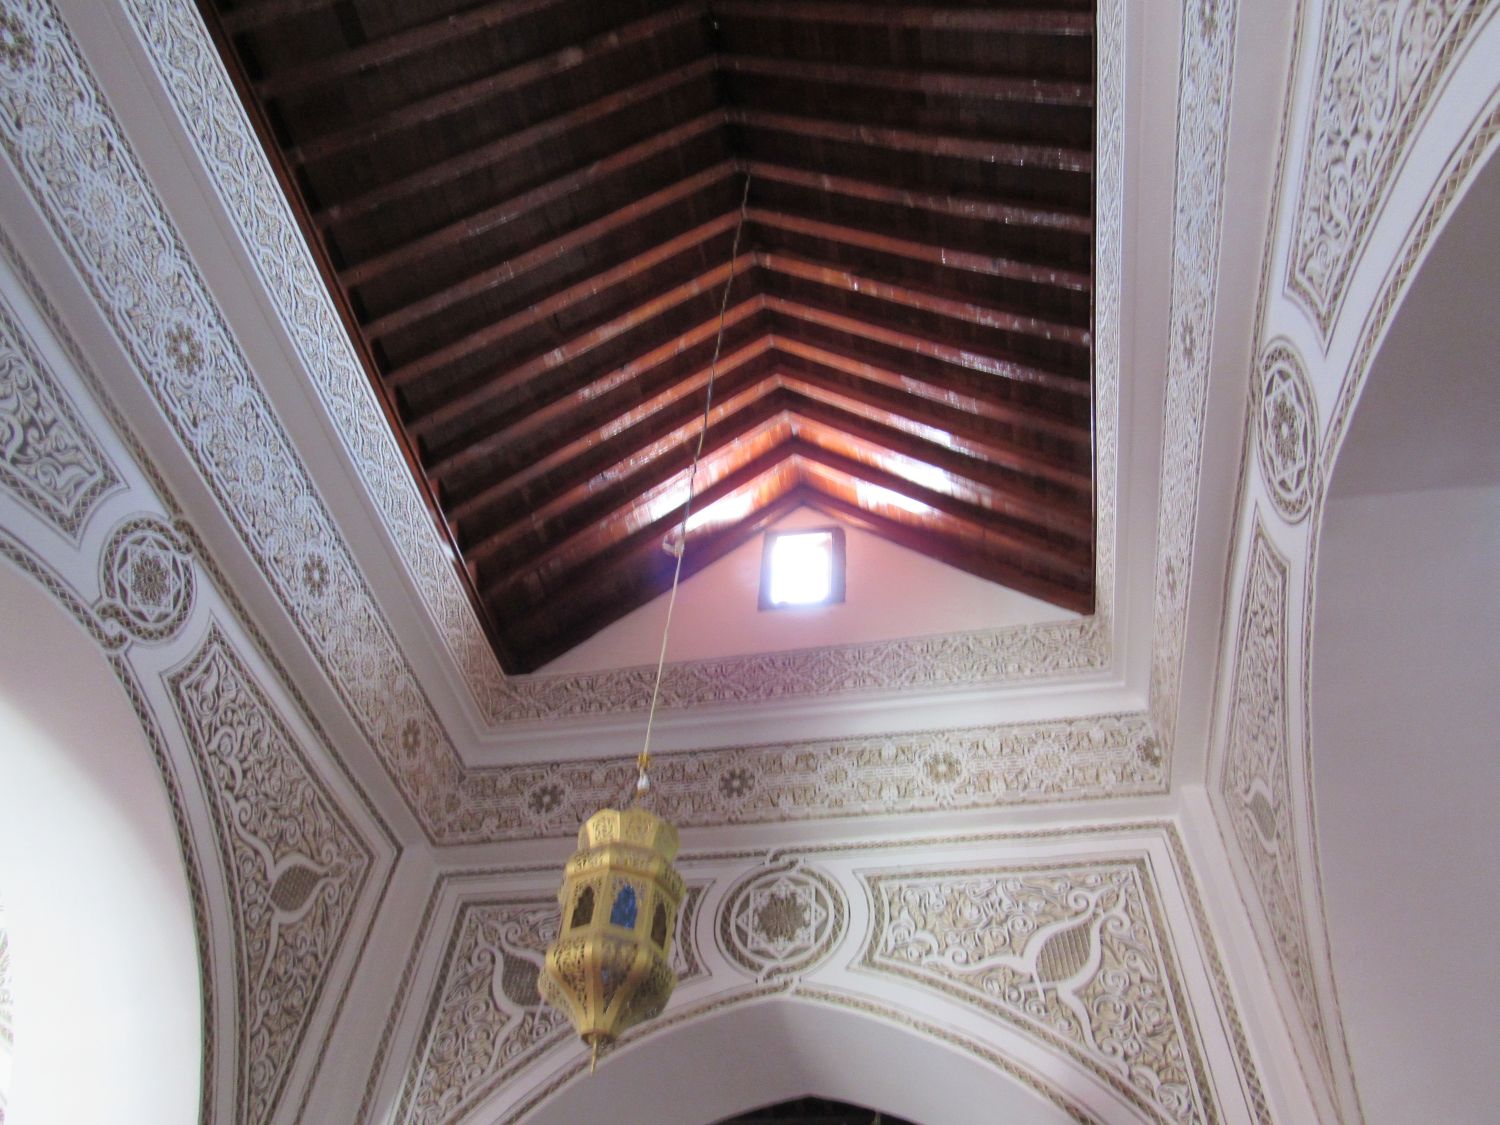 Interior view, prayer hall ceiling.